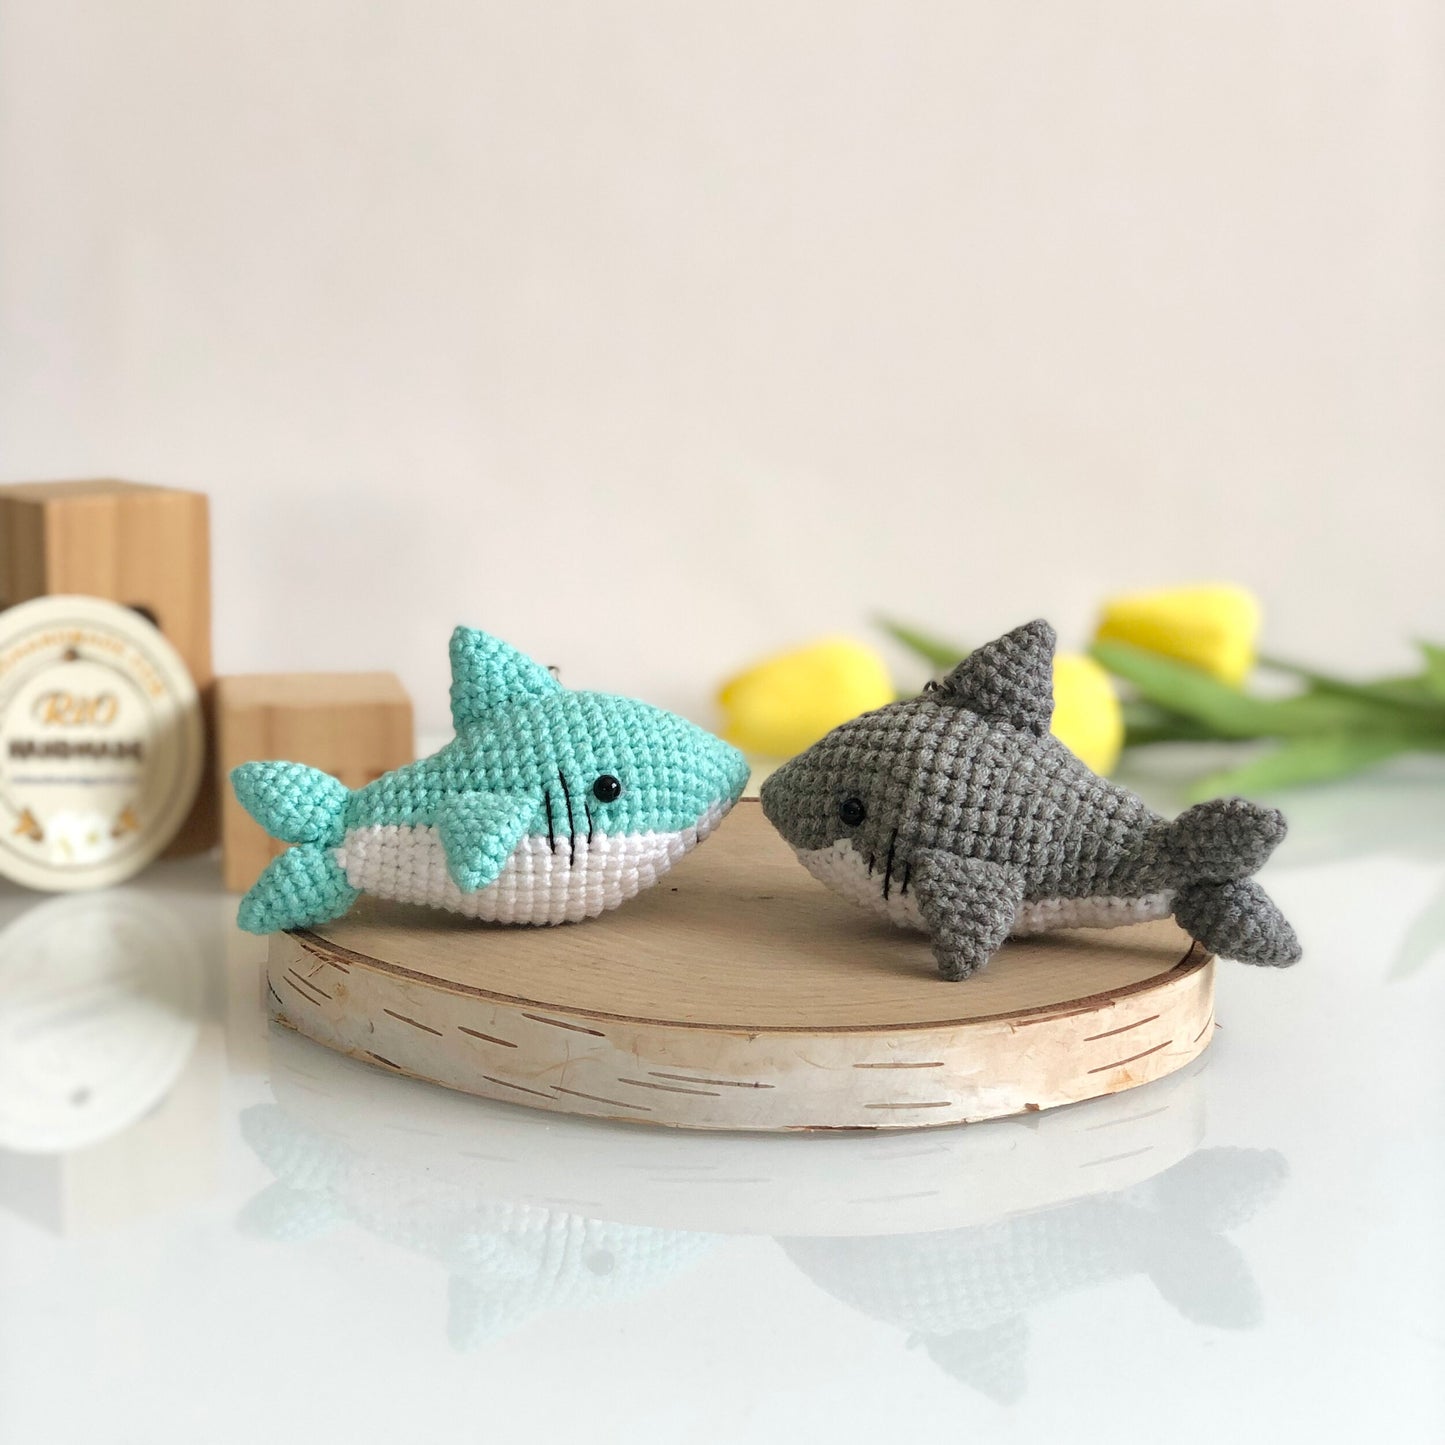 Handmade Shark crochet keychain, pom bag charm, car rear view hanging mirrior, amigurumi, cute gift.